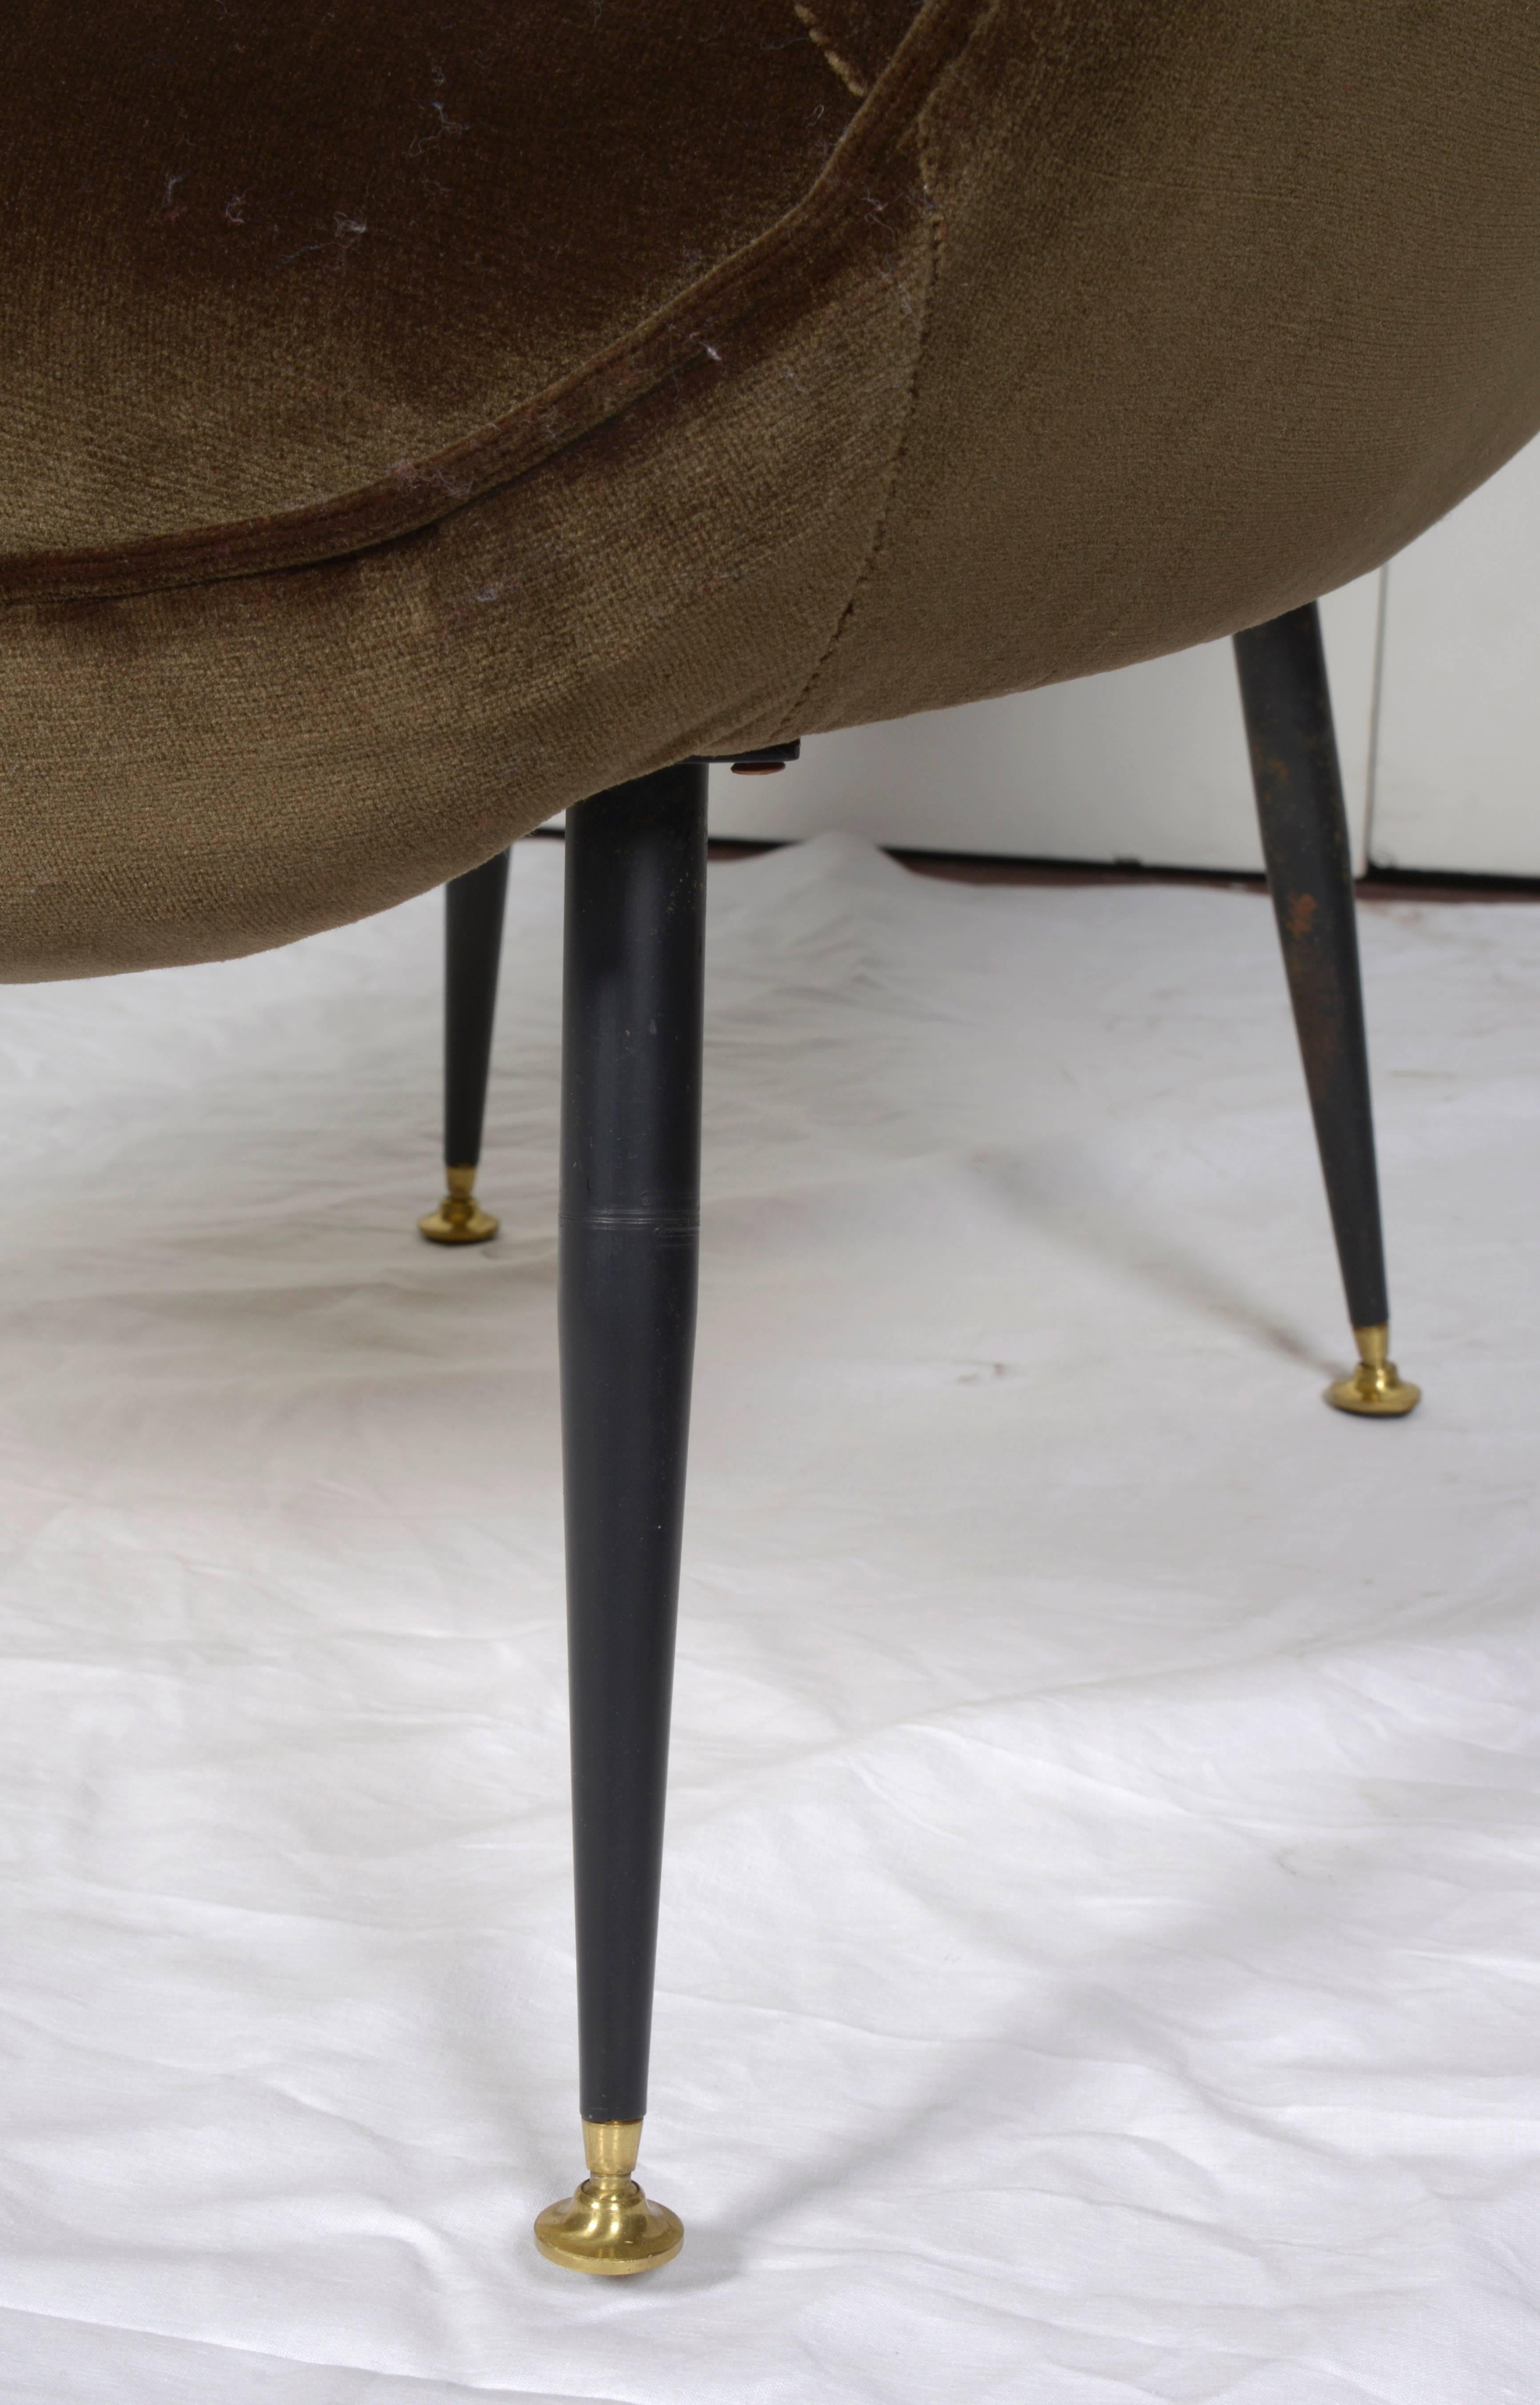 Pair of unusual ISA Bergamo armchairs
Reupholstered in taupe velvet